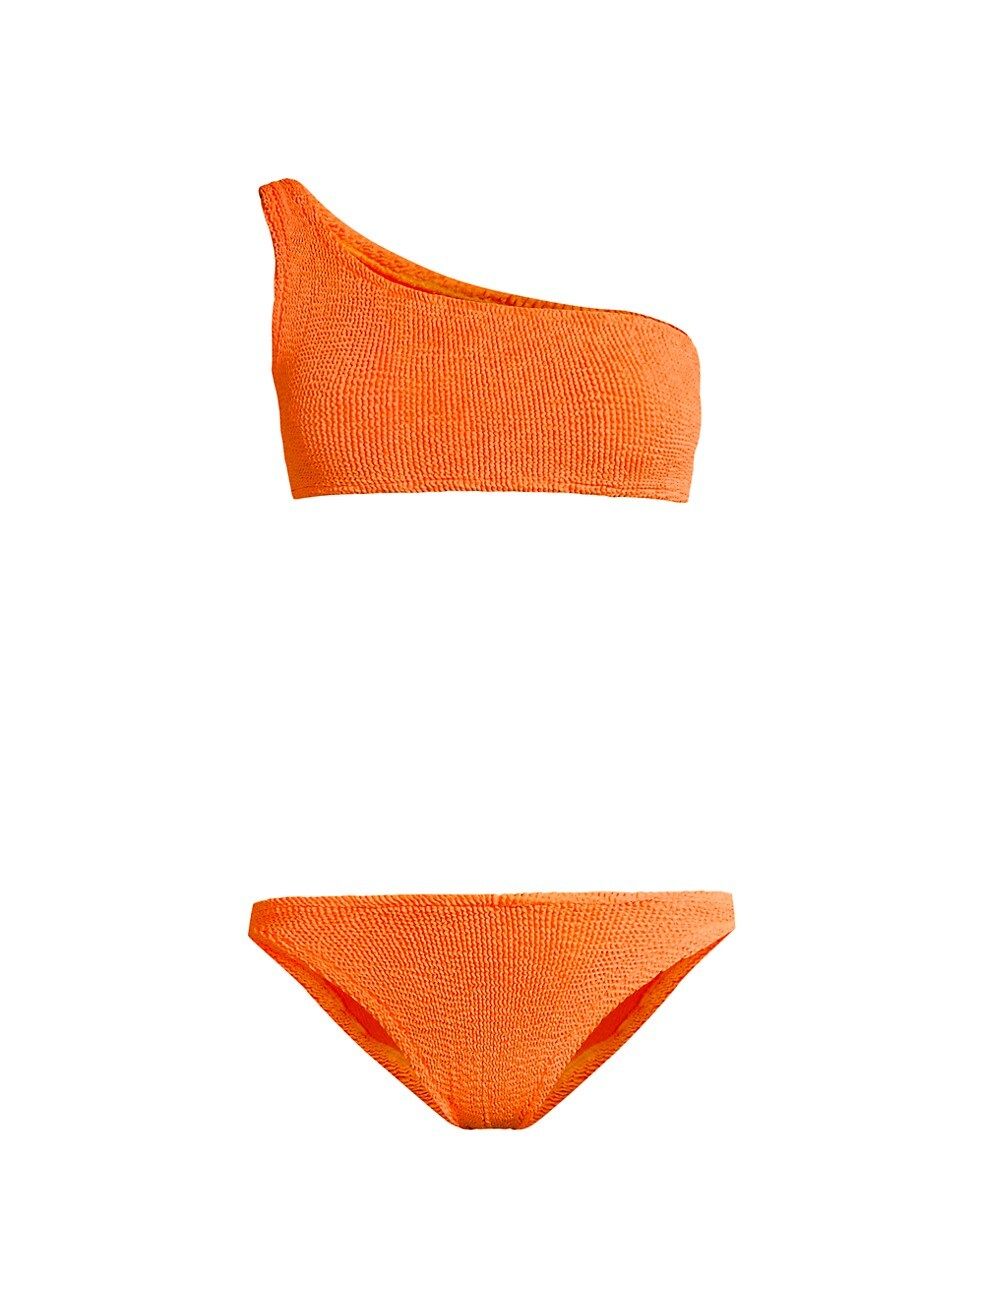 Nancy Nile 2-Piece Bikini Set | Saks Fifth Avenue